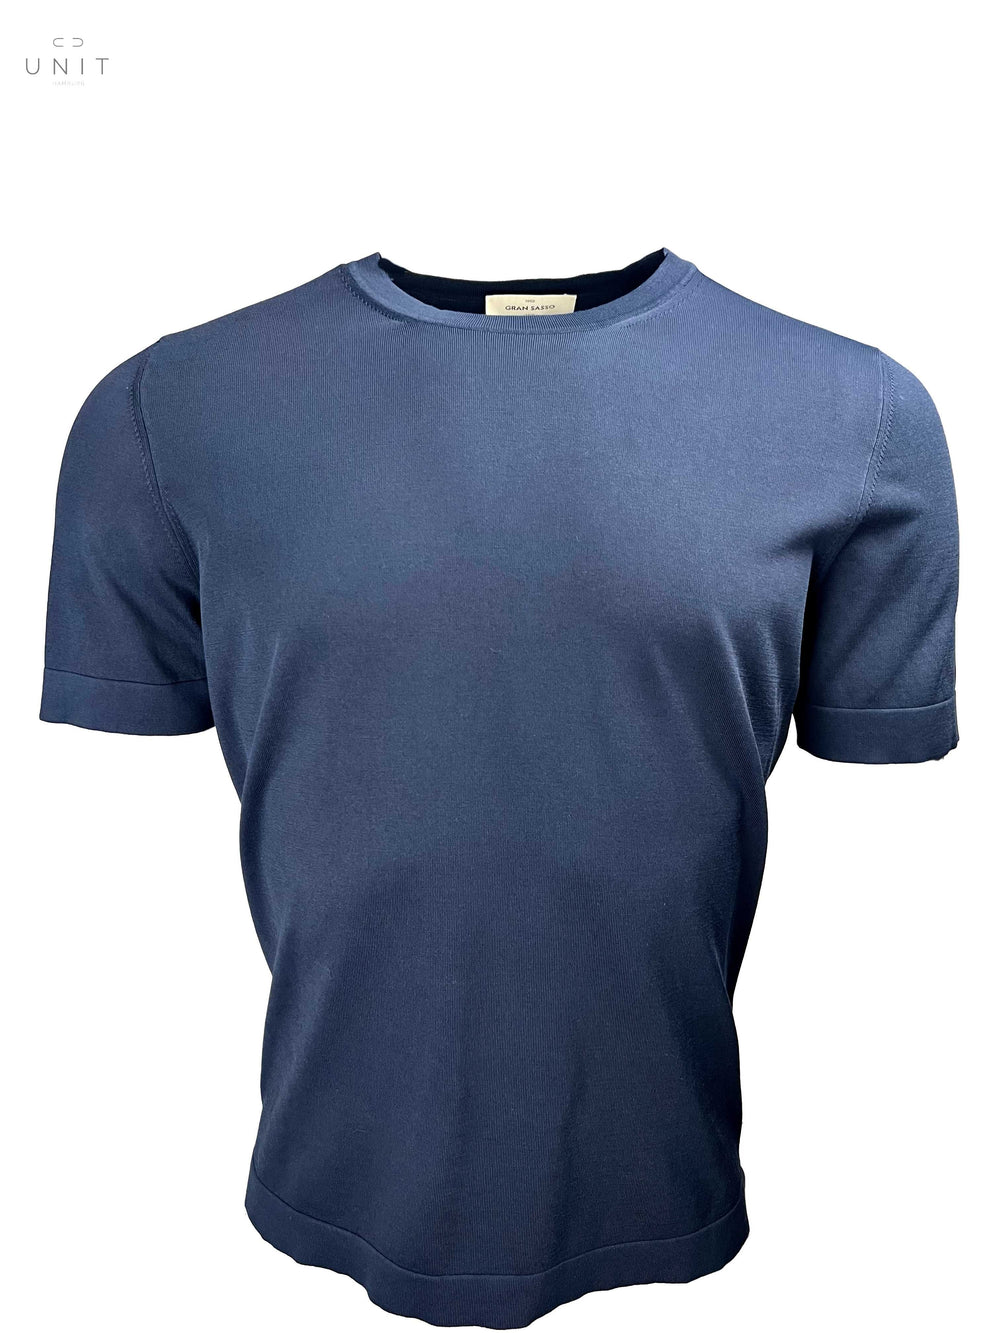 Gran Sasso,T-Shirt,Gran Sasso, Organic Cotton Vintage, T-Shirt Rundhals, navy,UNIT Hamburg